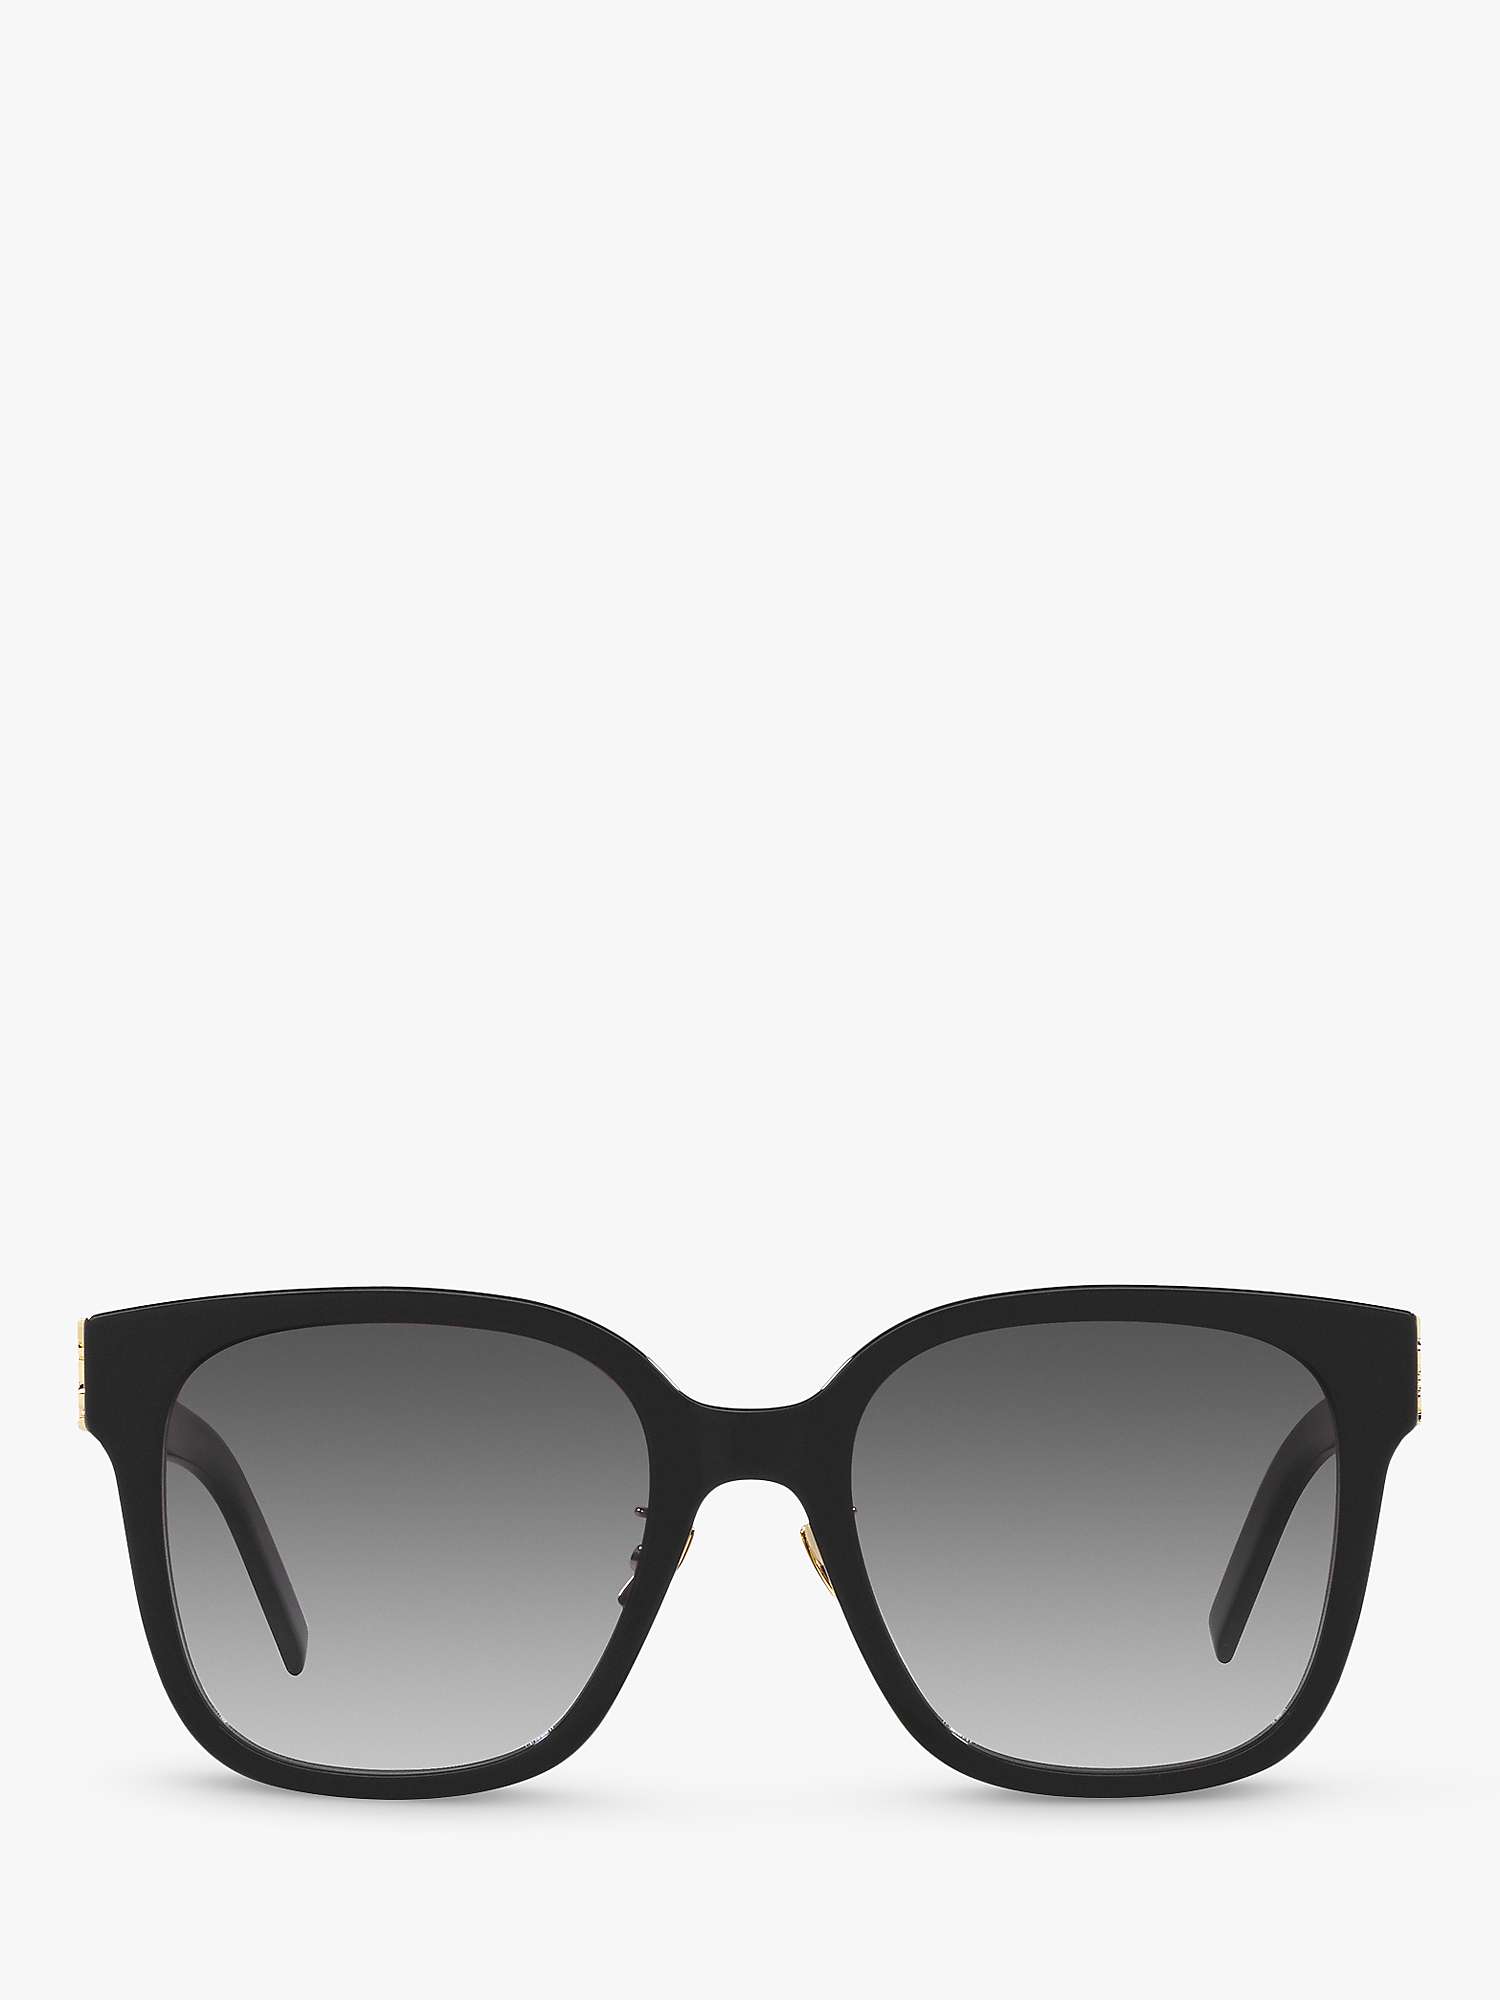 Buy Yves Saint Laurent YS000465 Women's Square Sunglasses, Black Online at johnlewis.com